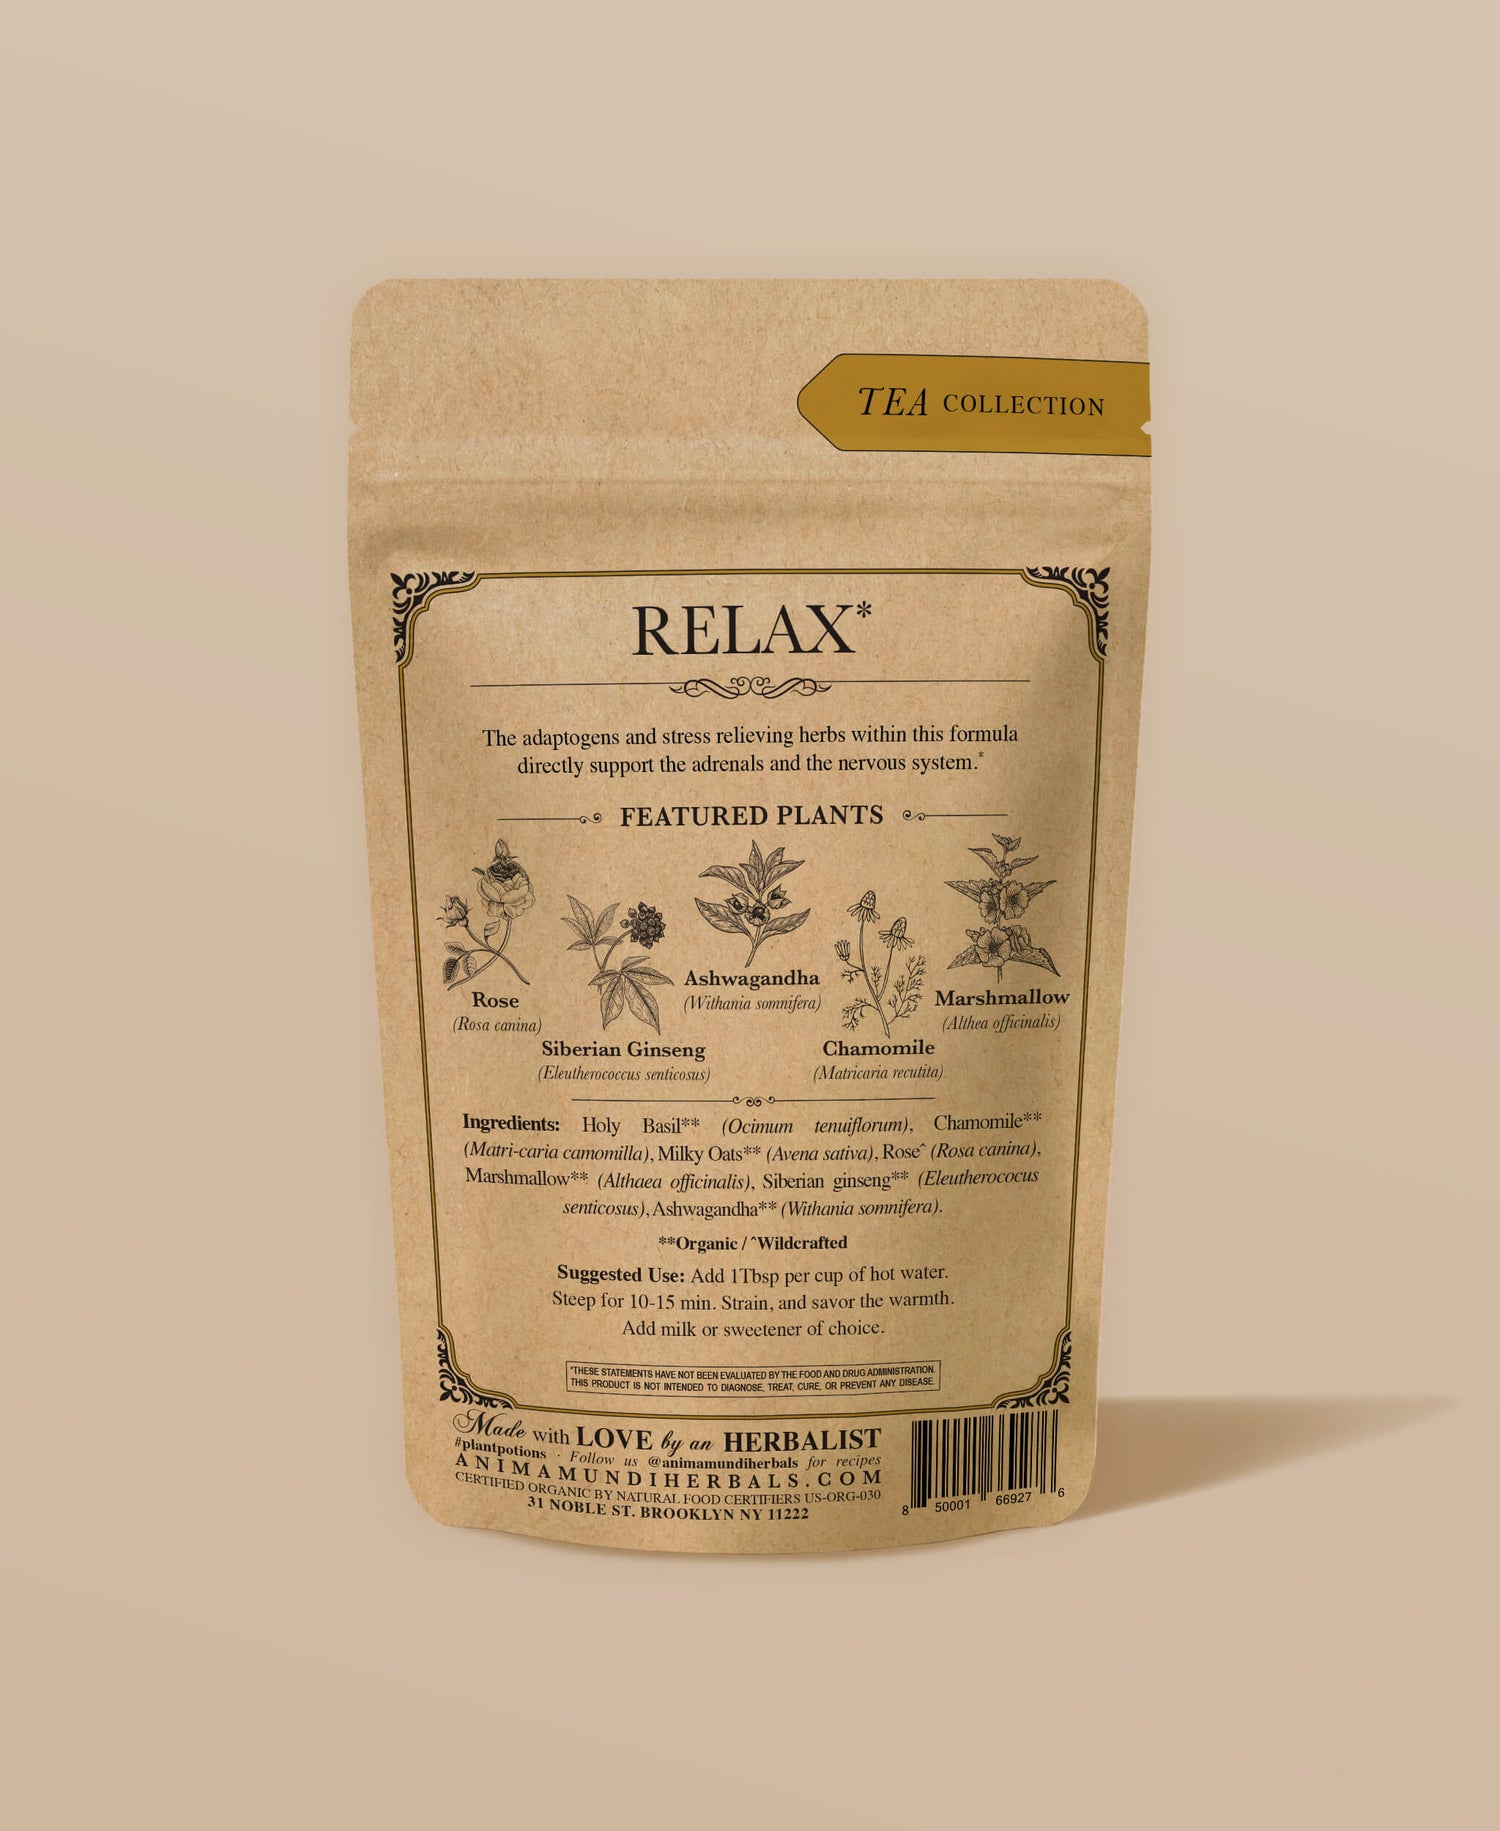 CALM Tea | Stress Relief Tonic